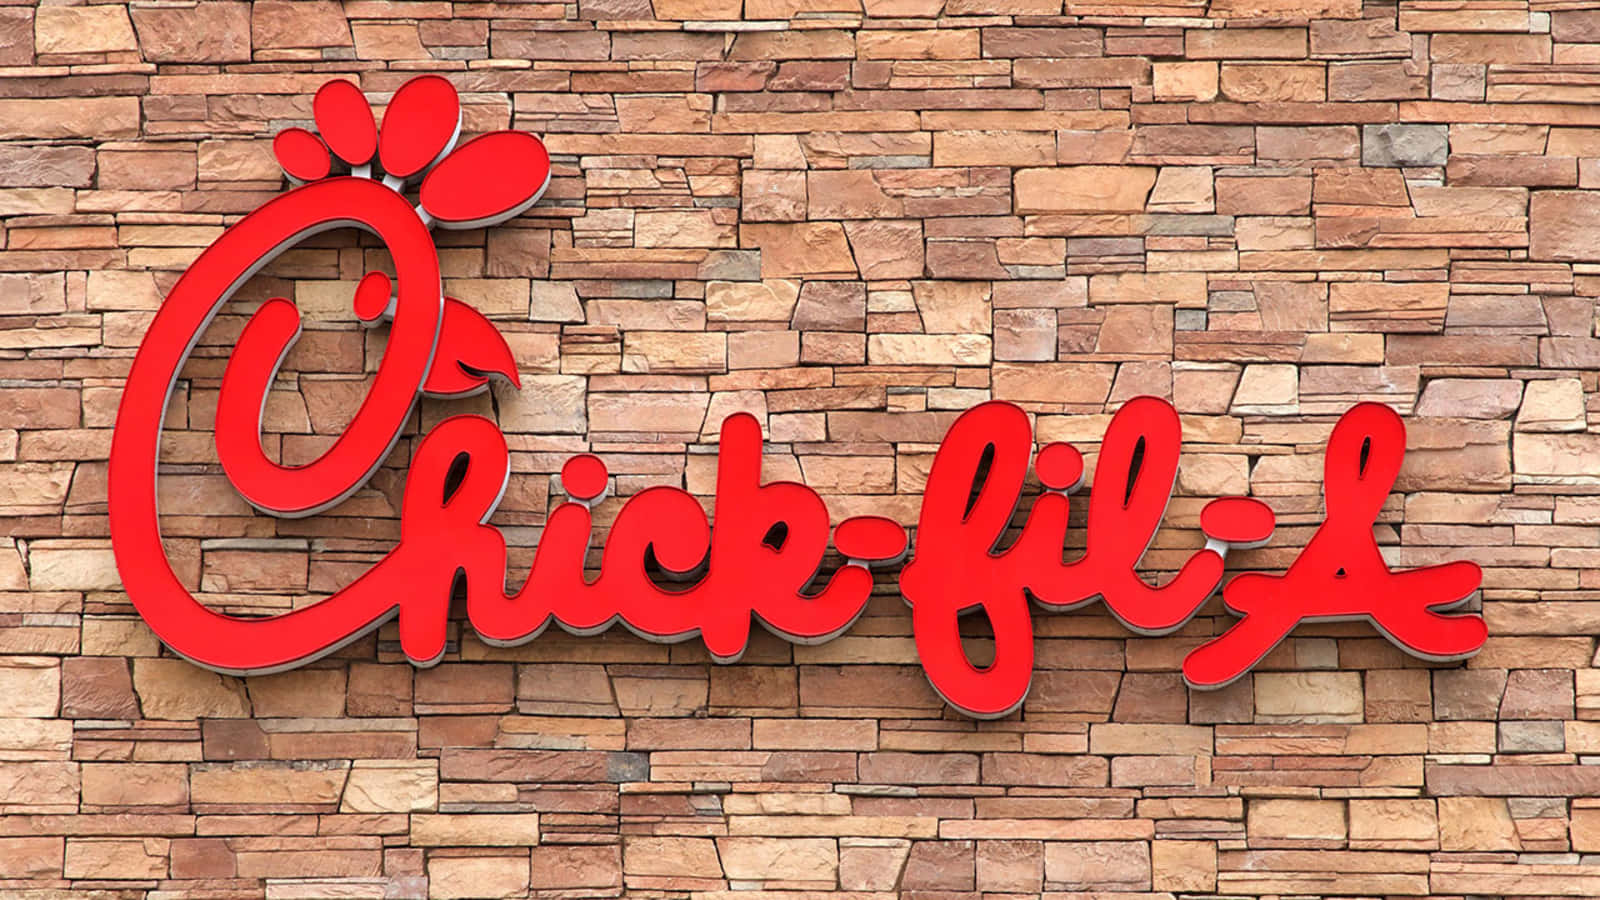 Chick Fil A Logo On A Brick Wall